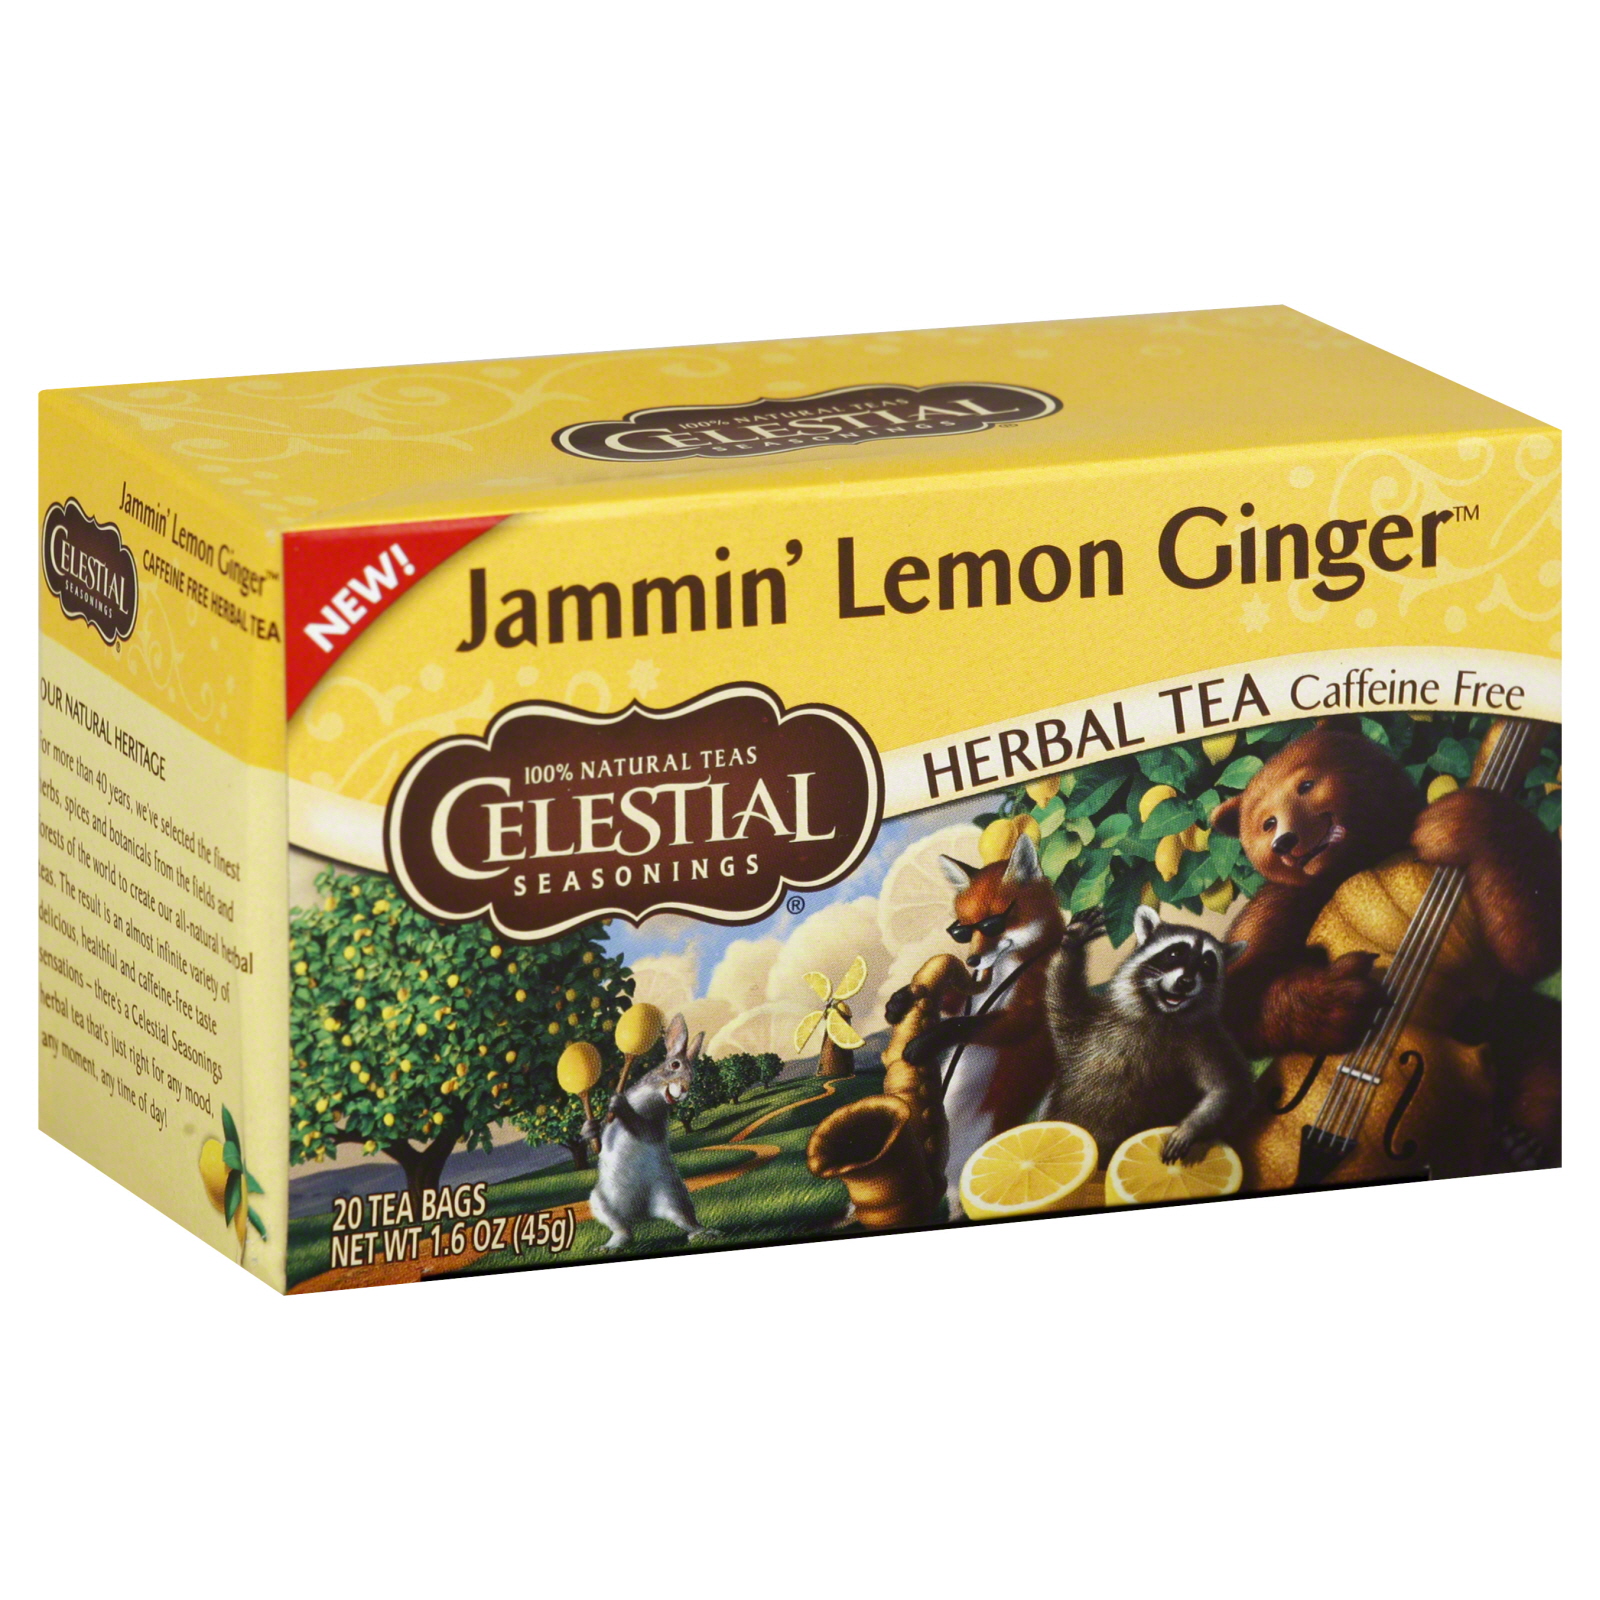 Celestial Seasonings Herbal Tea - Jammin' Lemon Ginger - Caffeine Free - Case of 6 - 20 Bags